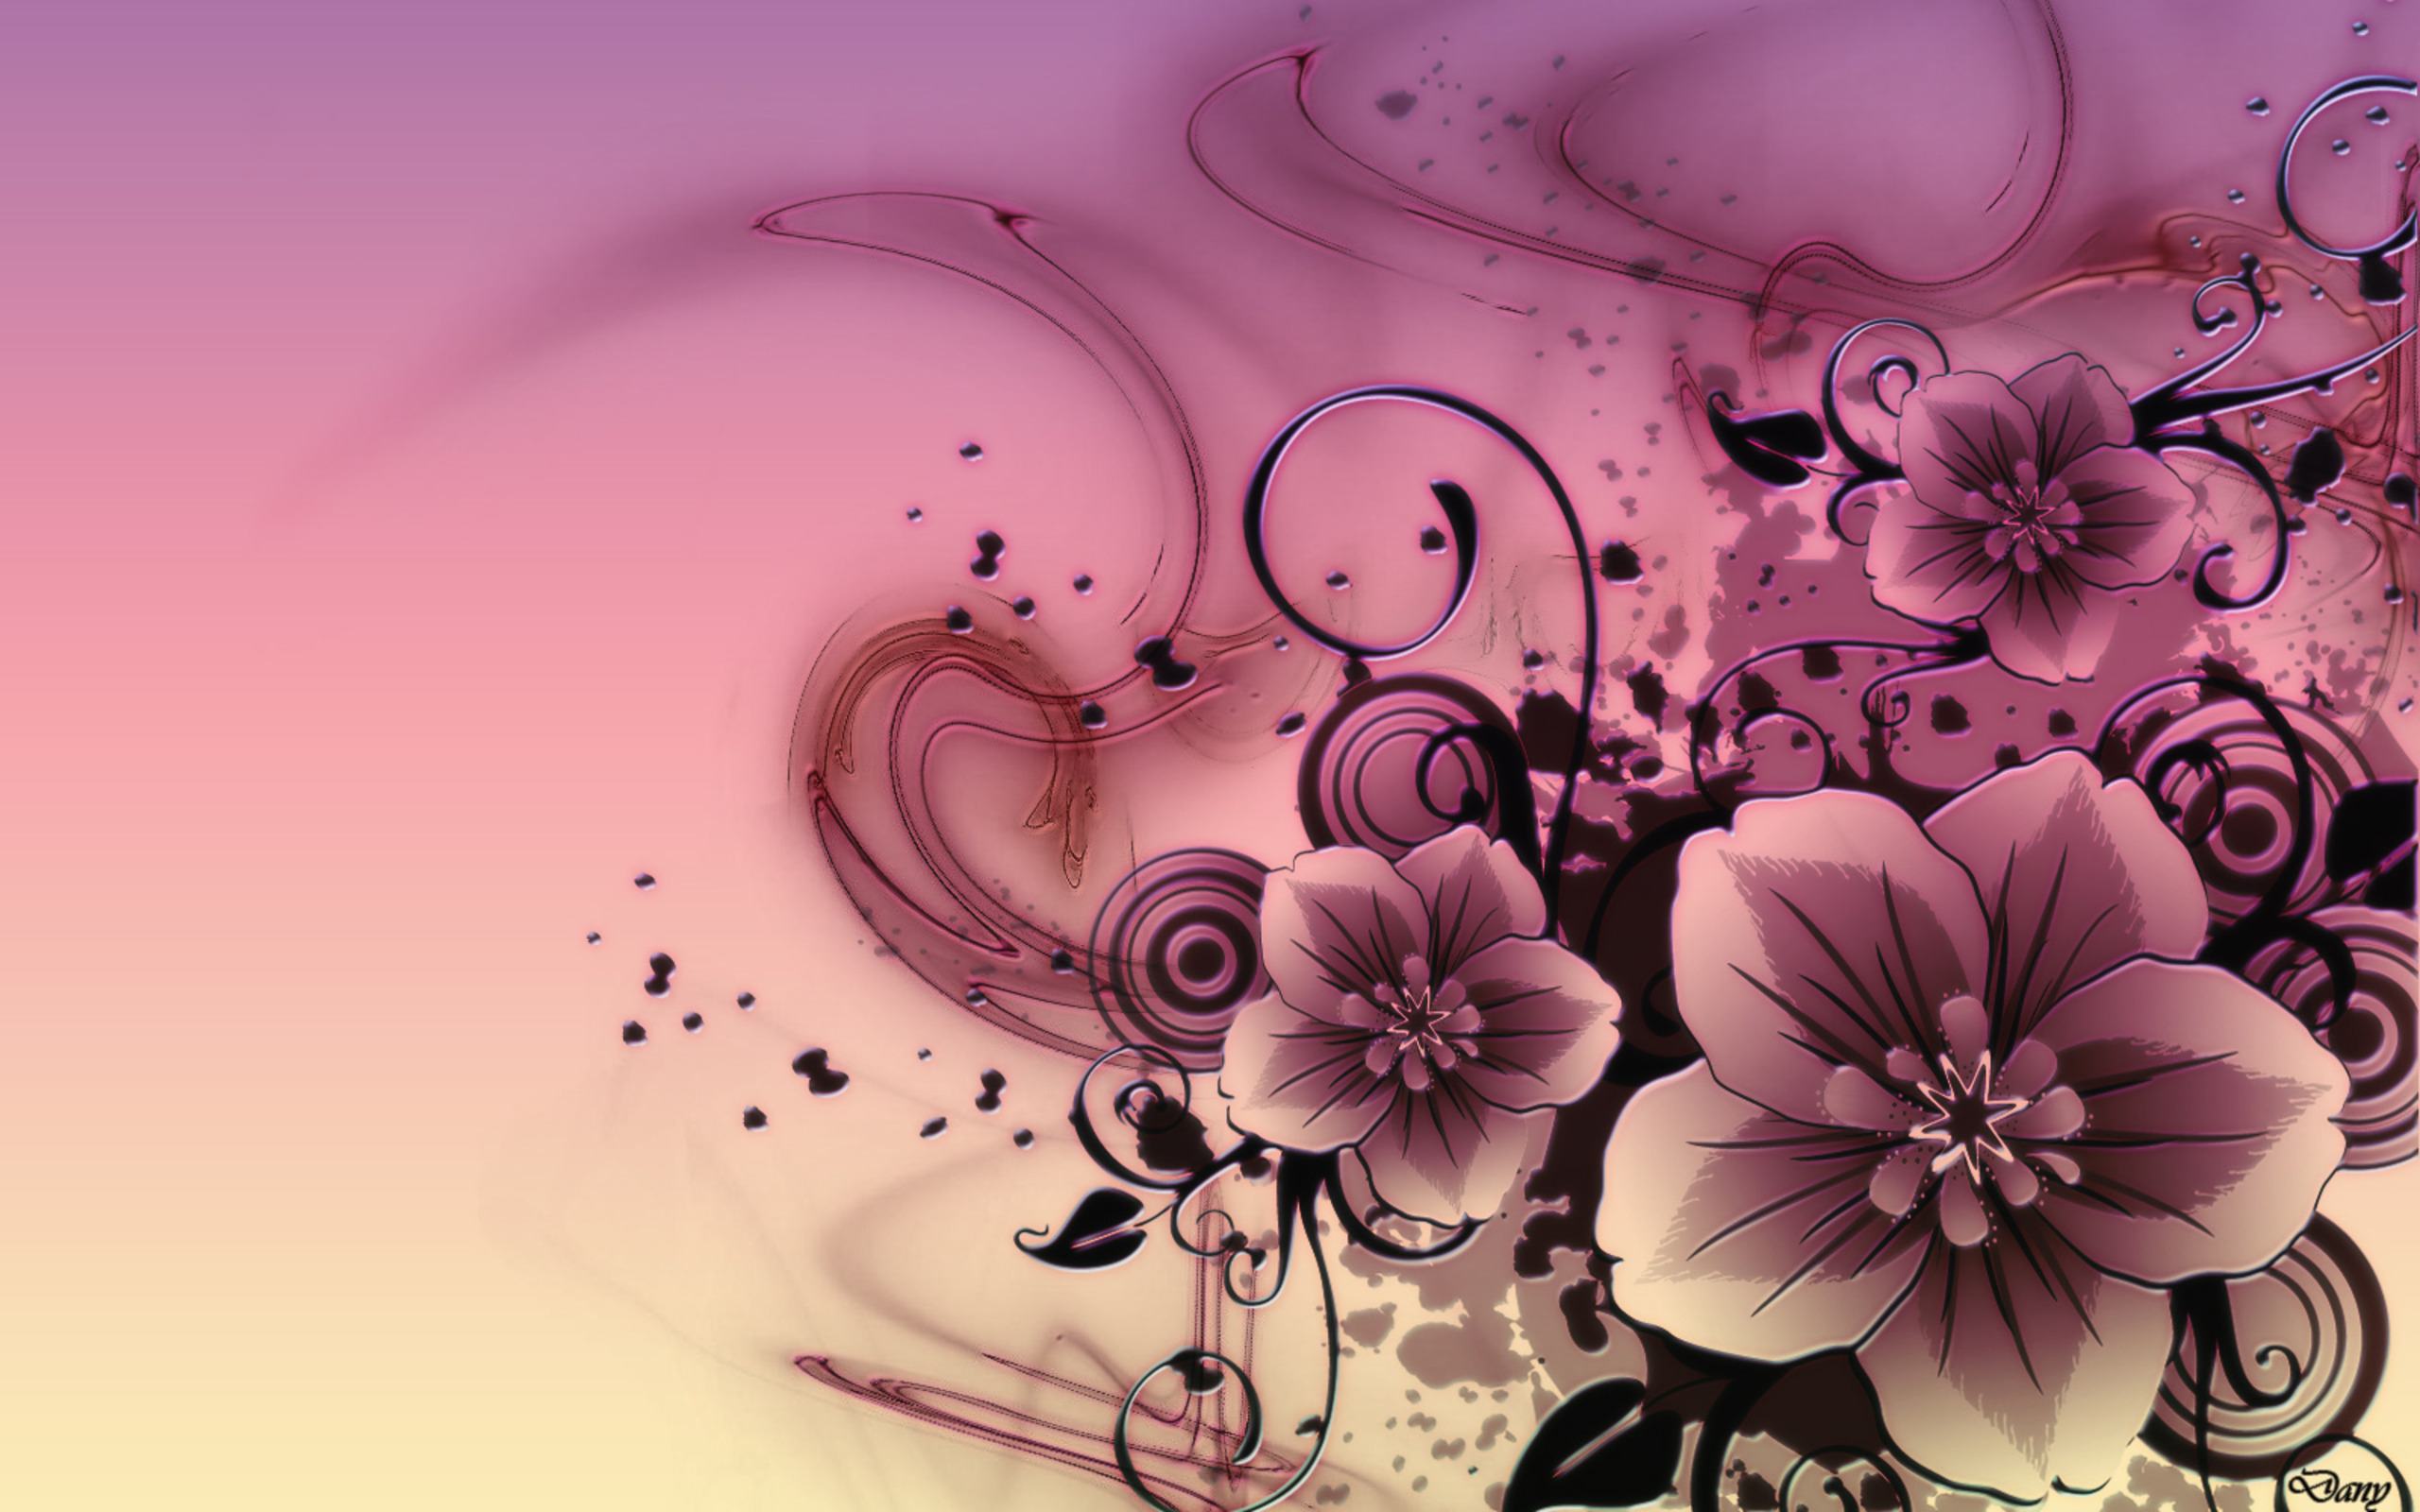 Flowers wallpapers for desktop background full screen